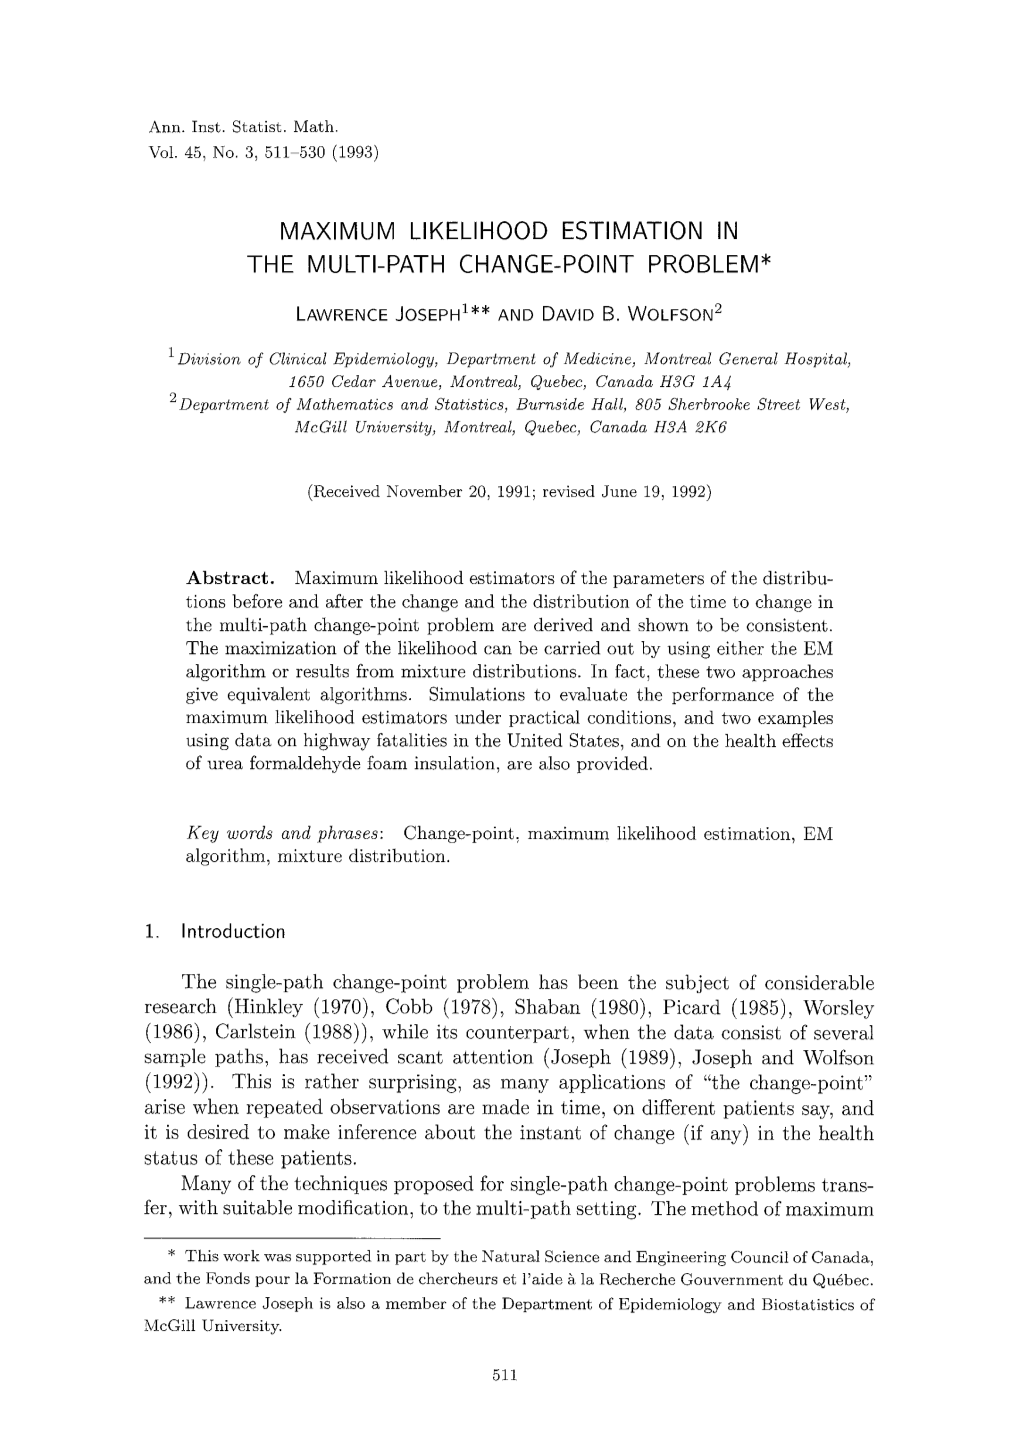 Maximum Likelihood Estimation in the Multi-Path Change-Point Problem*